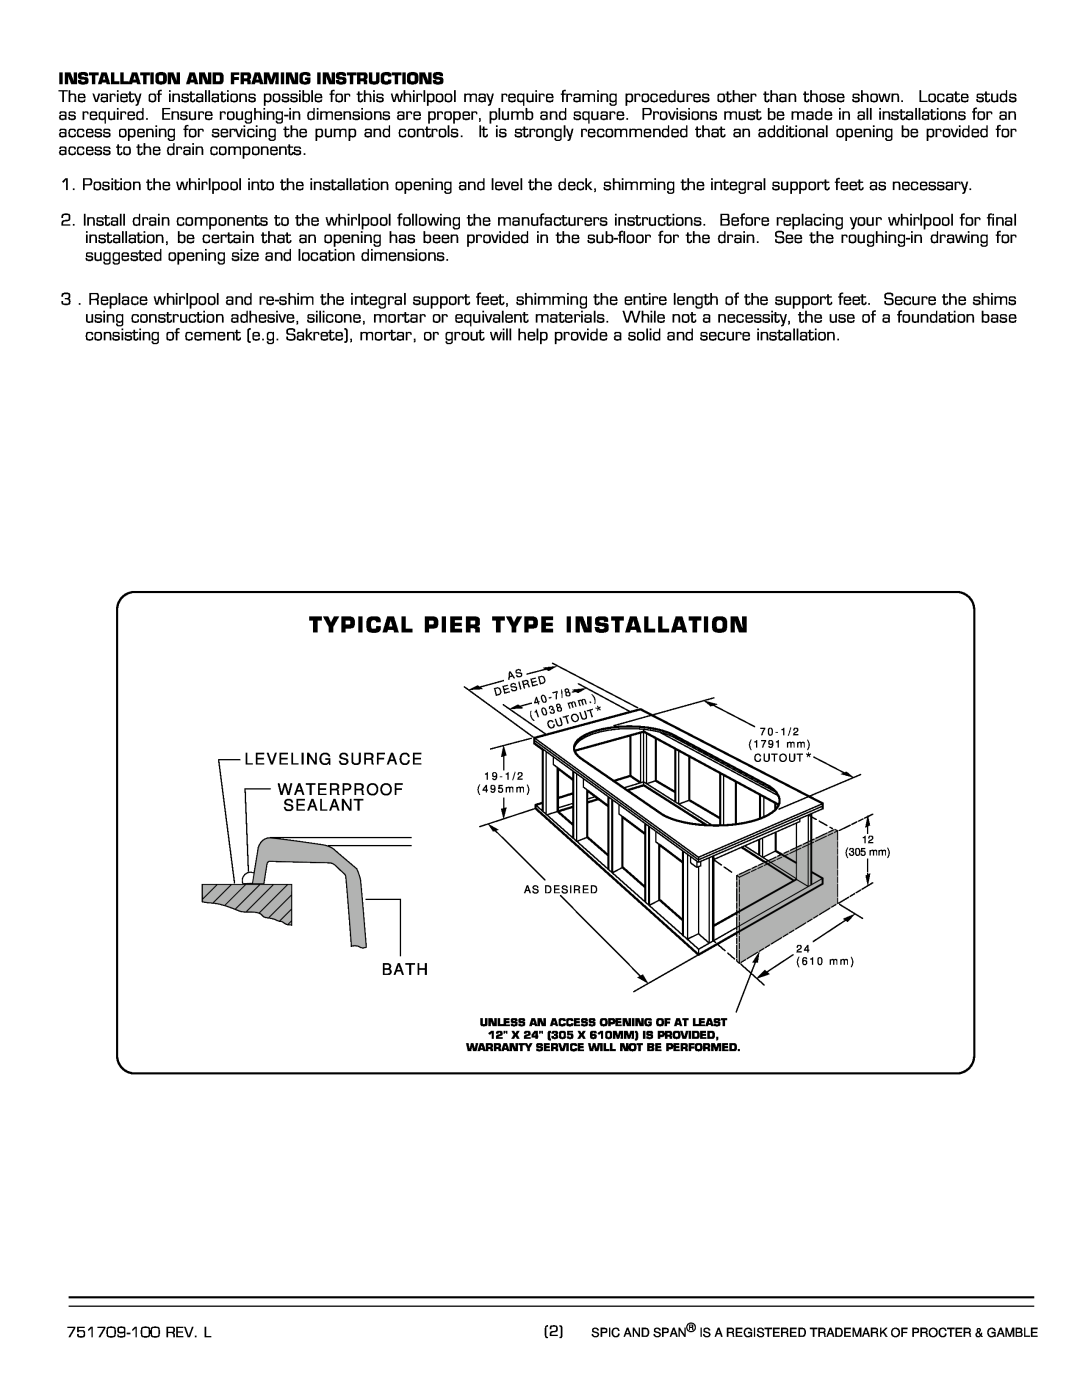 American Standard 7242.XXXW installation instructions Typical Pier Type Installation, Installation And Framing Instructions 